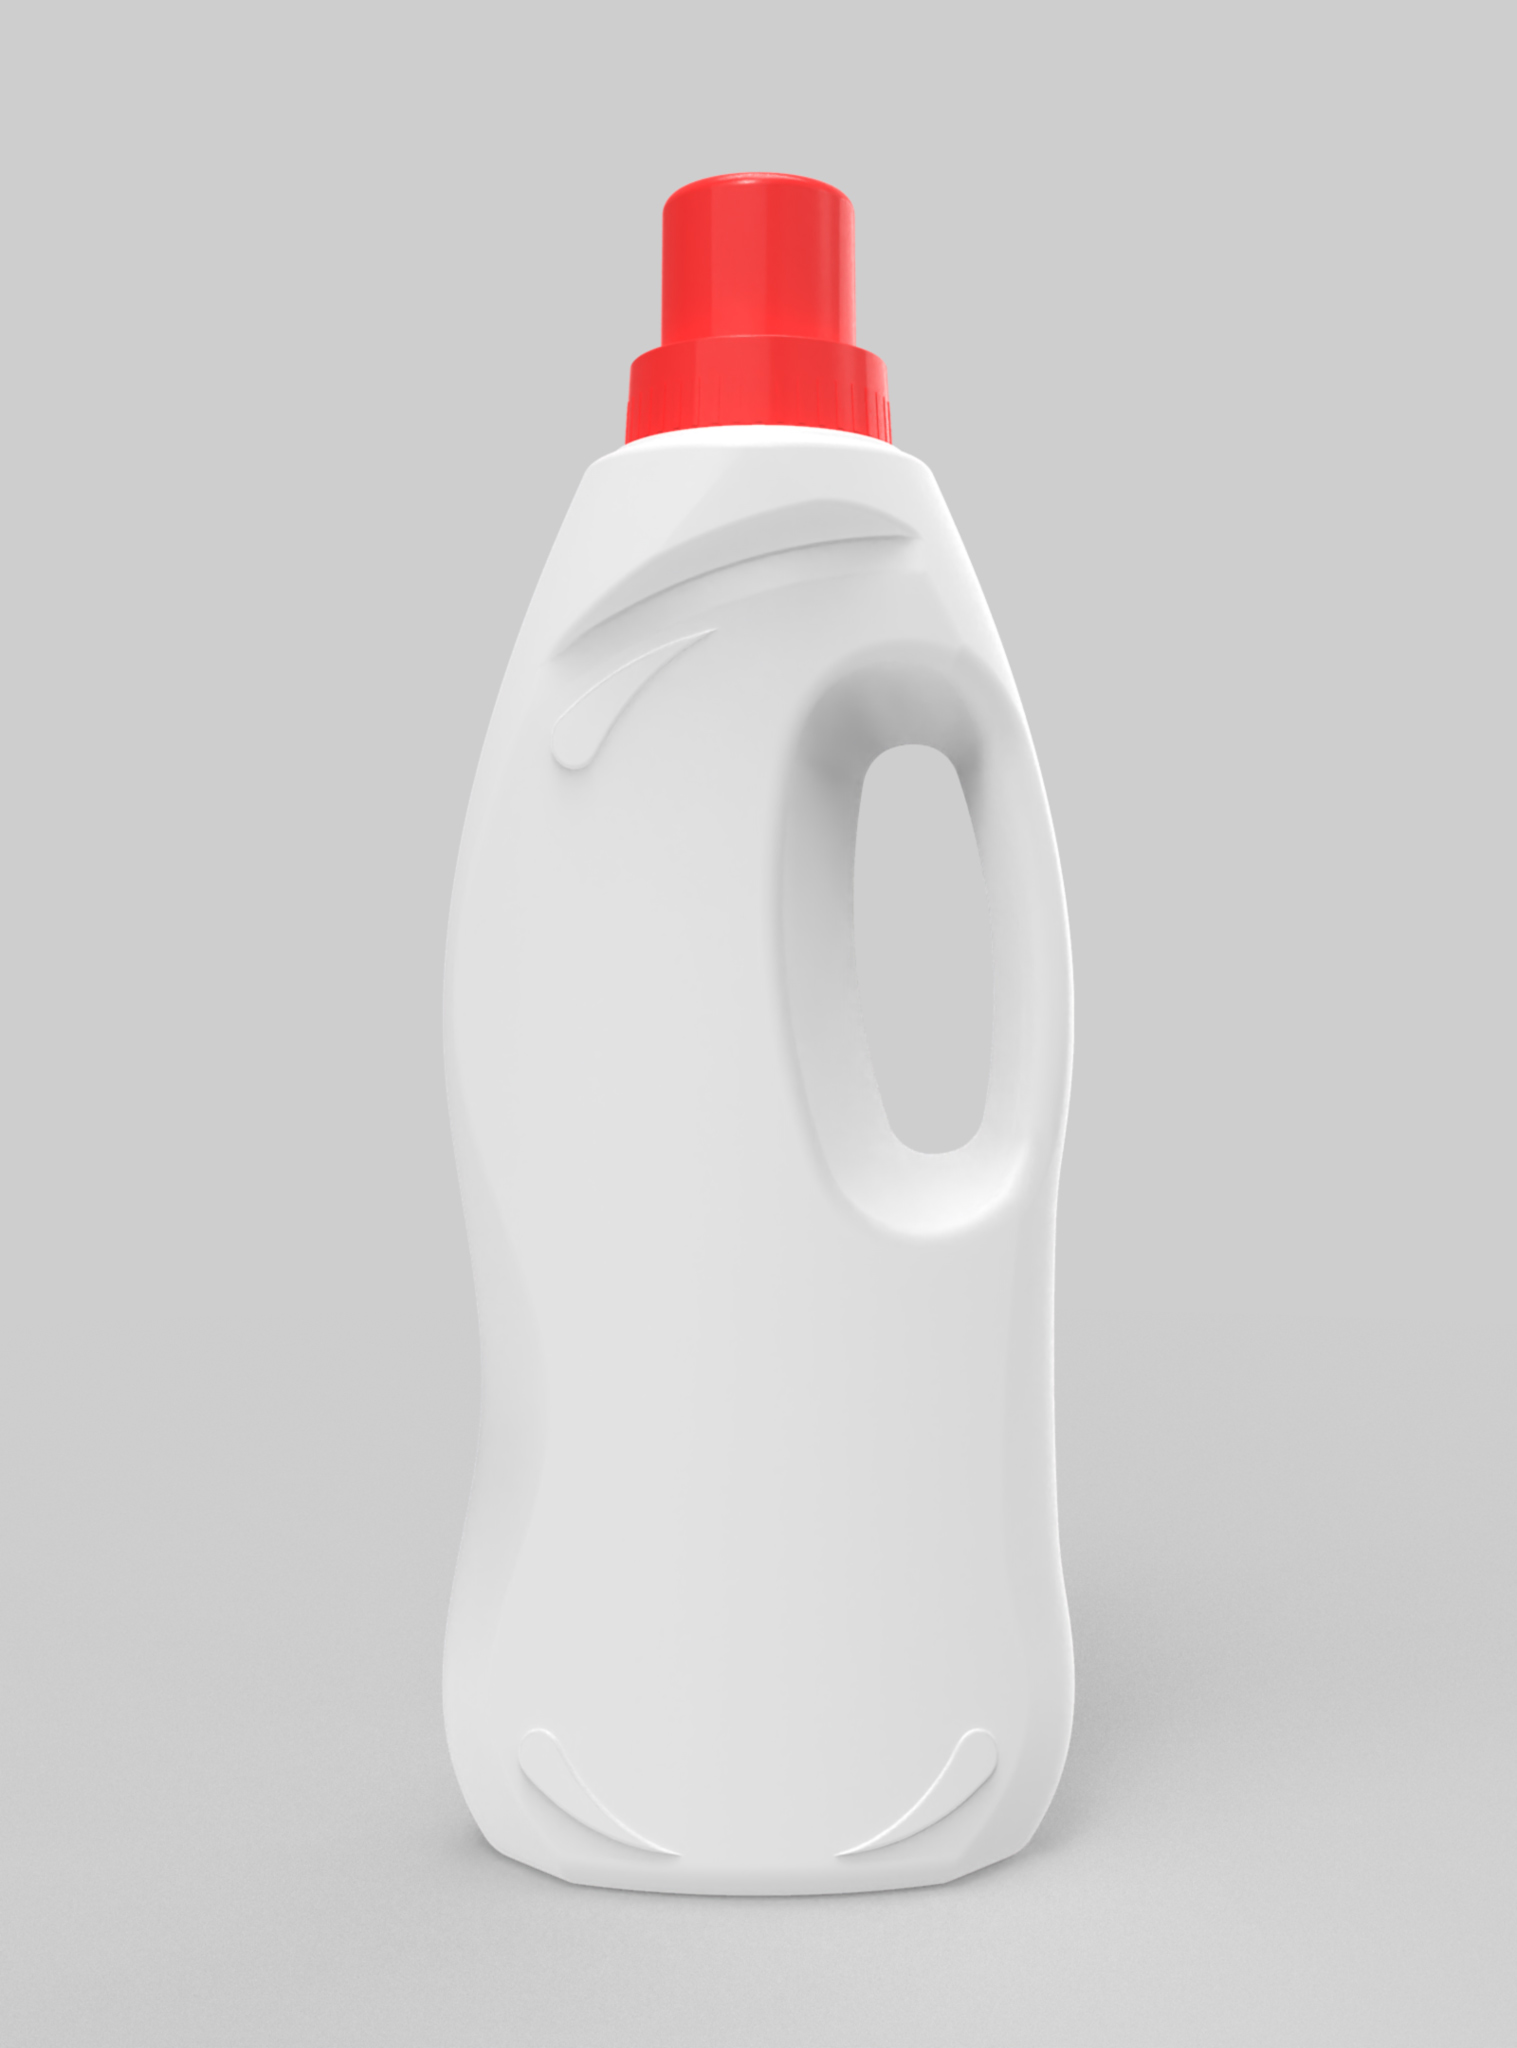 Envase plastico detergente liquido 1 litro blanco tapa roja